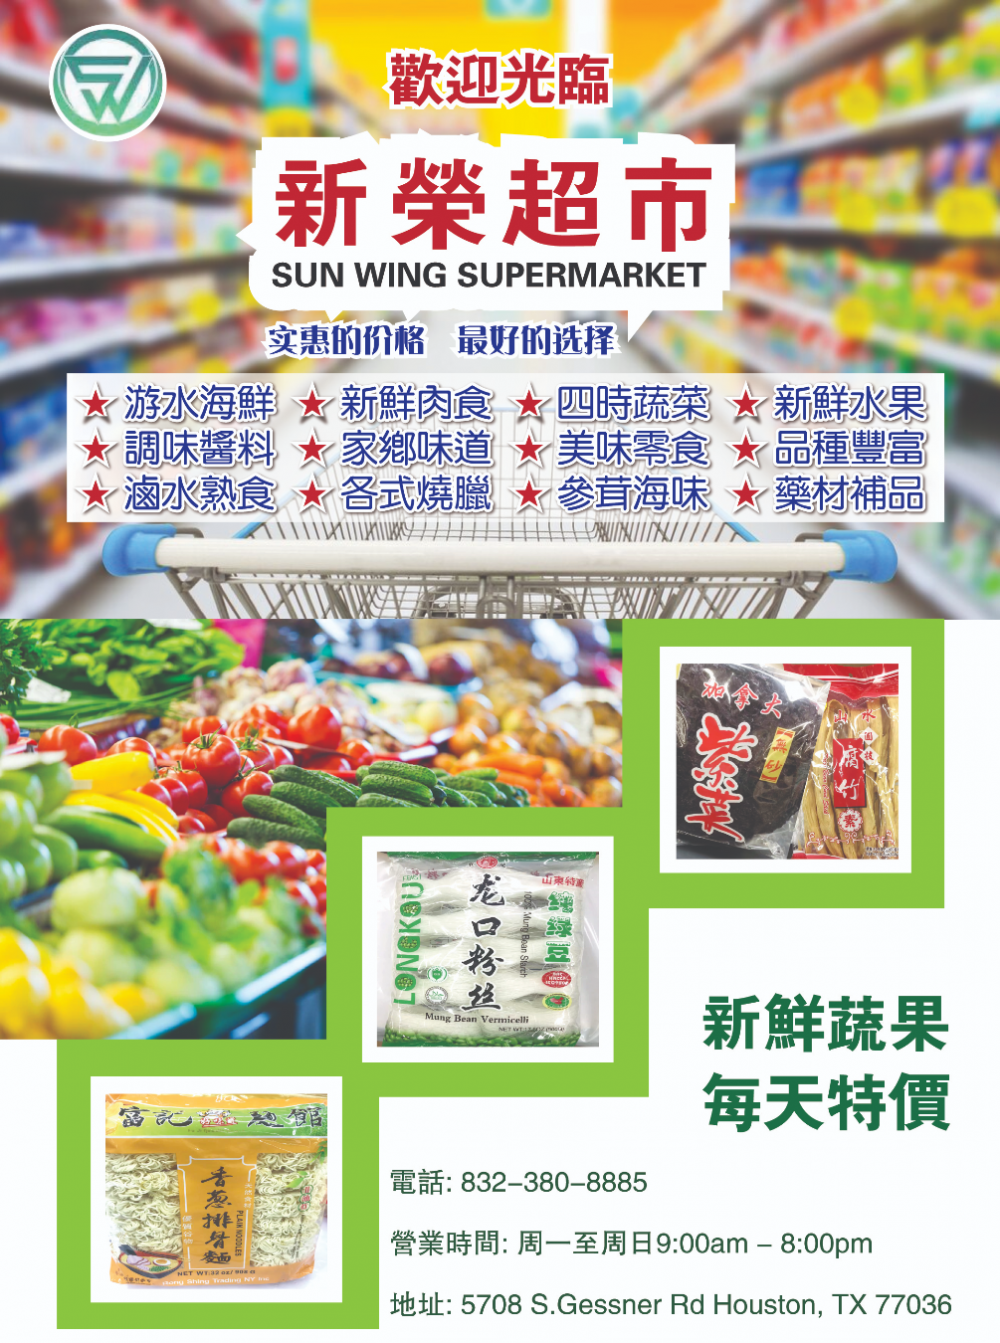 Sun Wing Supermarket 新榮超市